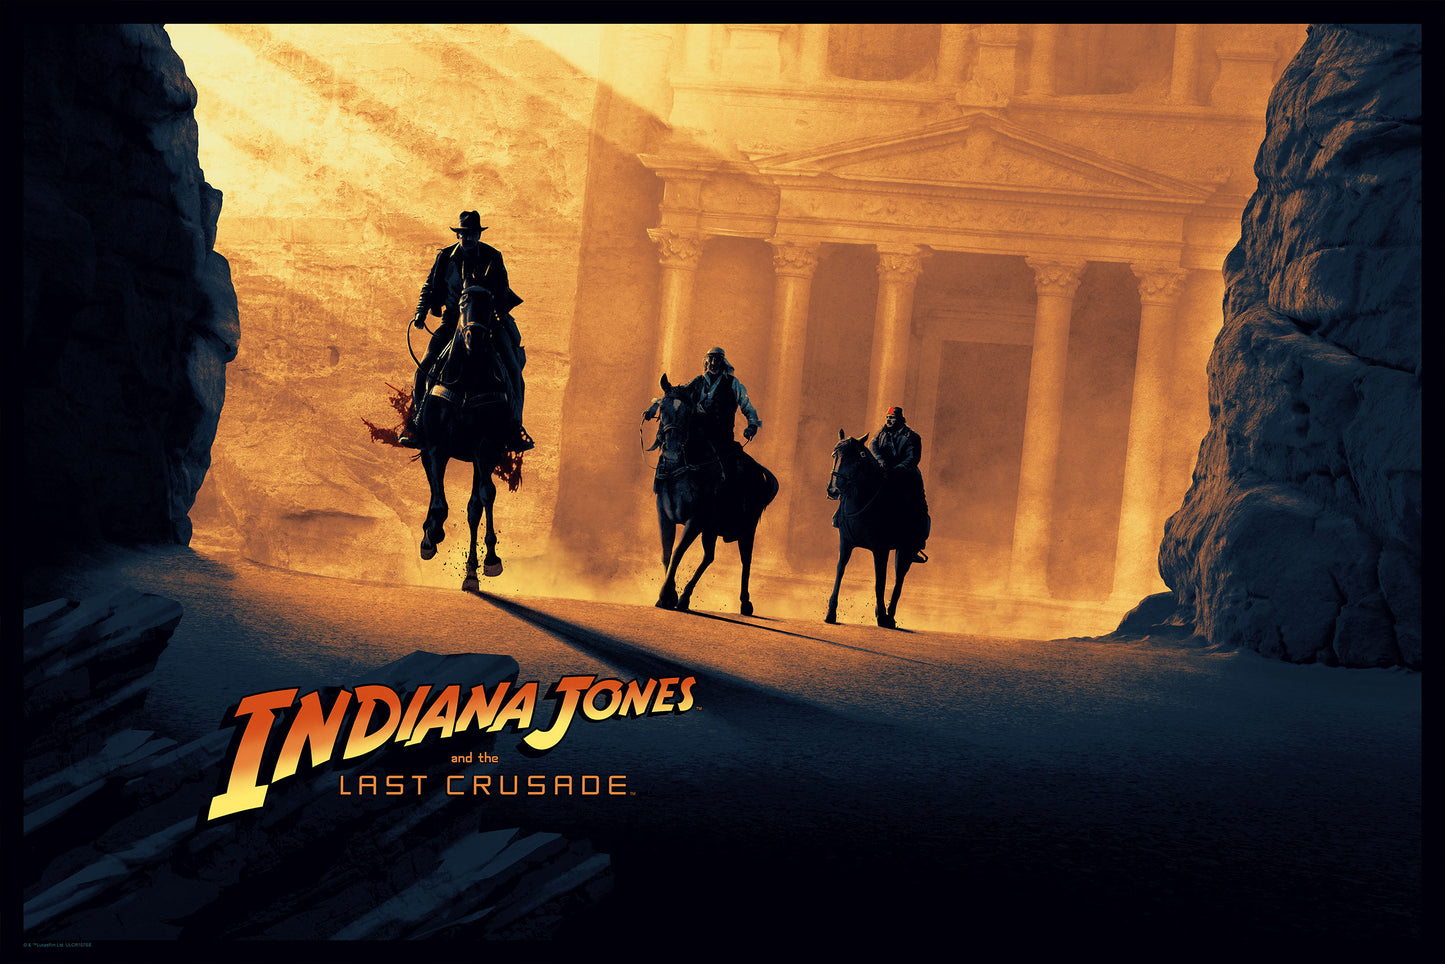 Matt Ferguson "Illumination (Indiana Jones and the Last Crusade)"